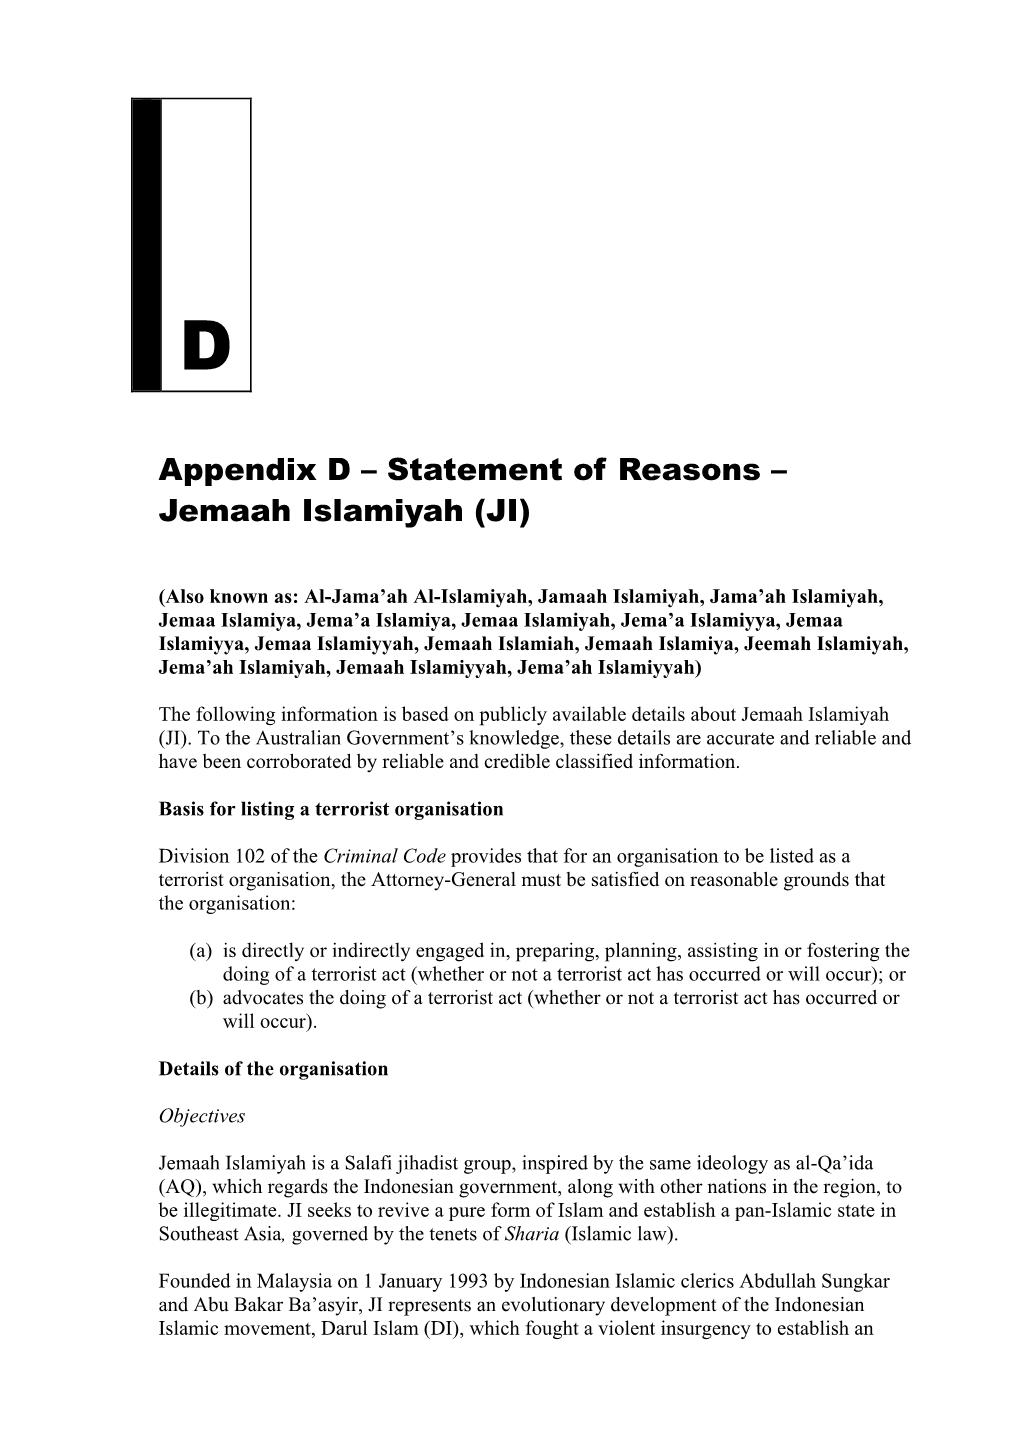 Appendix D – Statement of Reasons – Jemaah Islamiyah (JI)